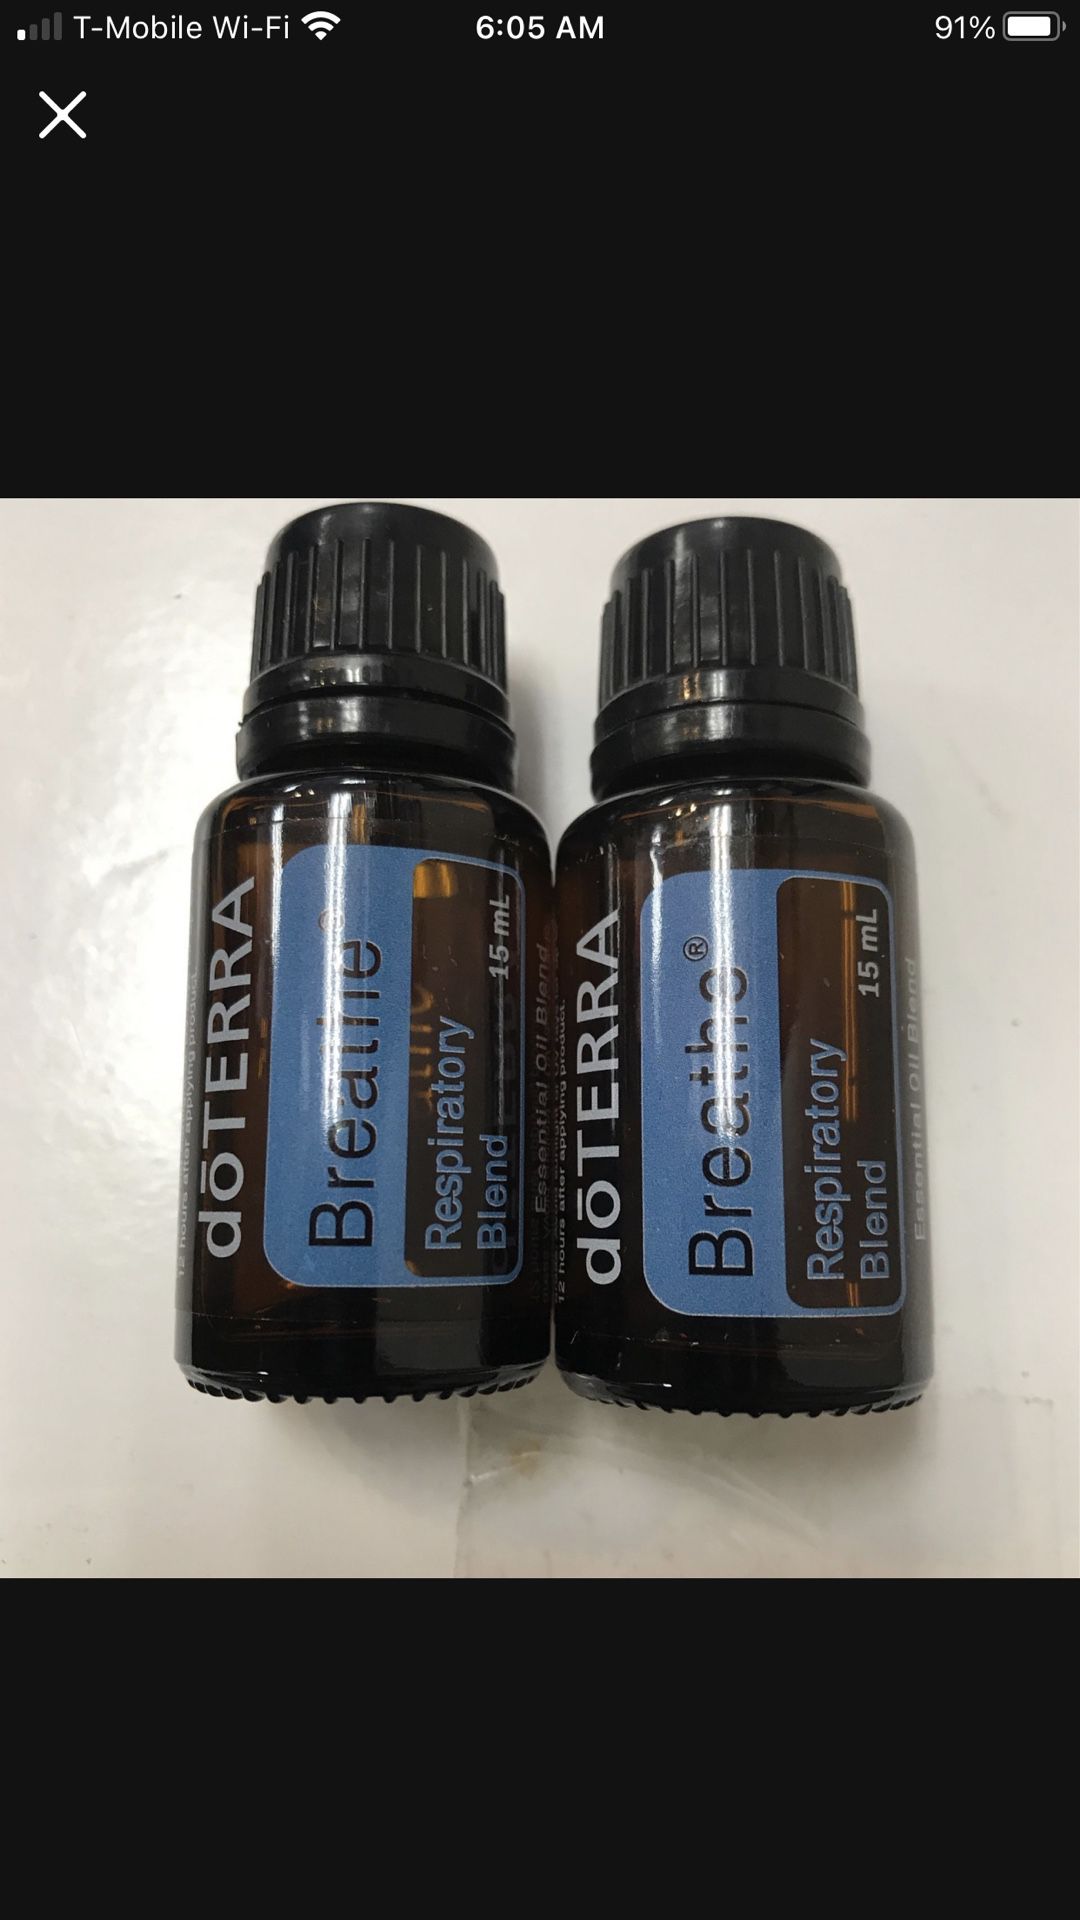  We/Sealed  doTERRA Breath Essential Oil 15 ml 2 Pack